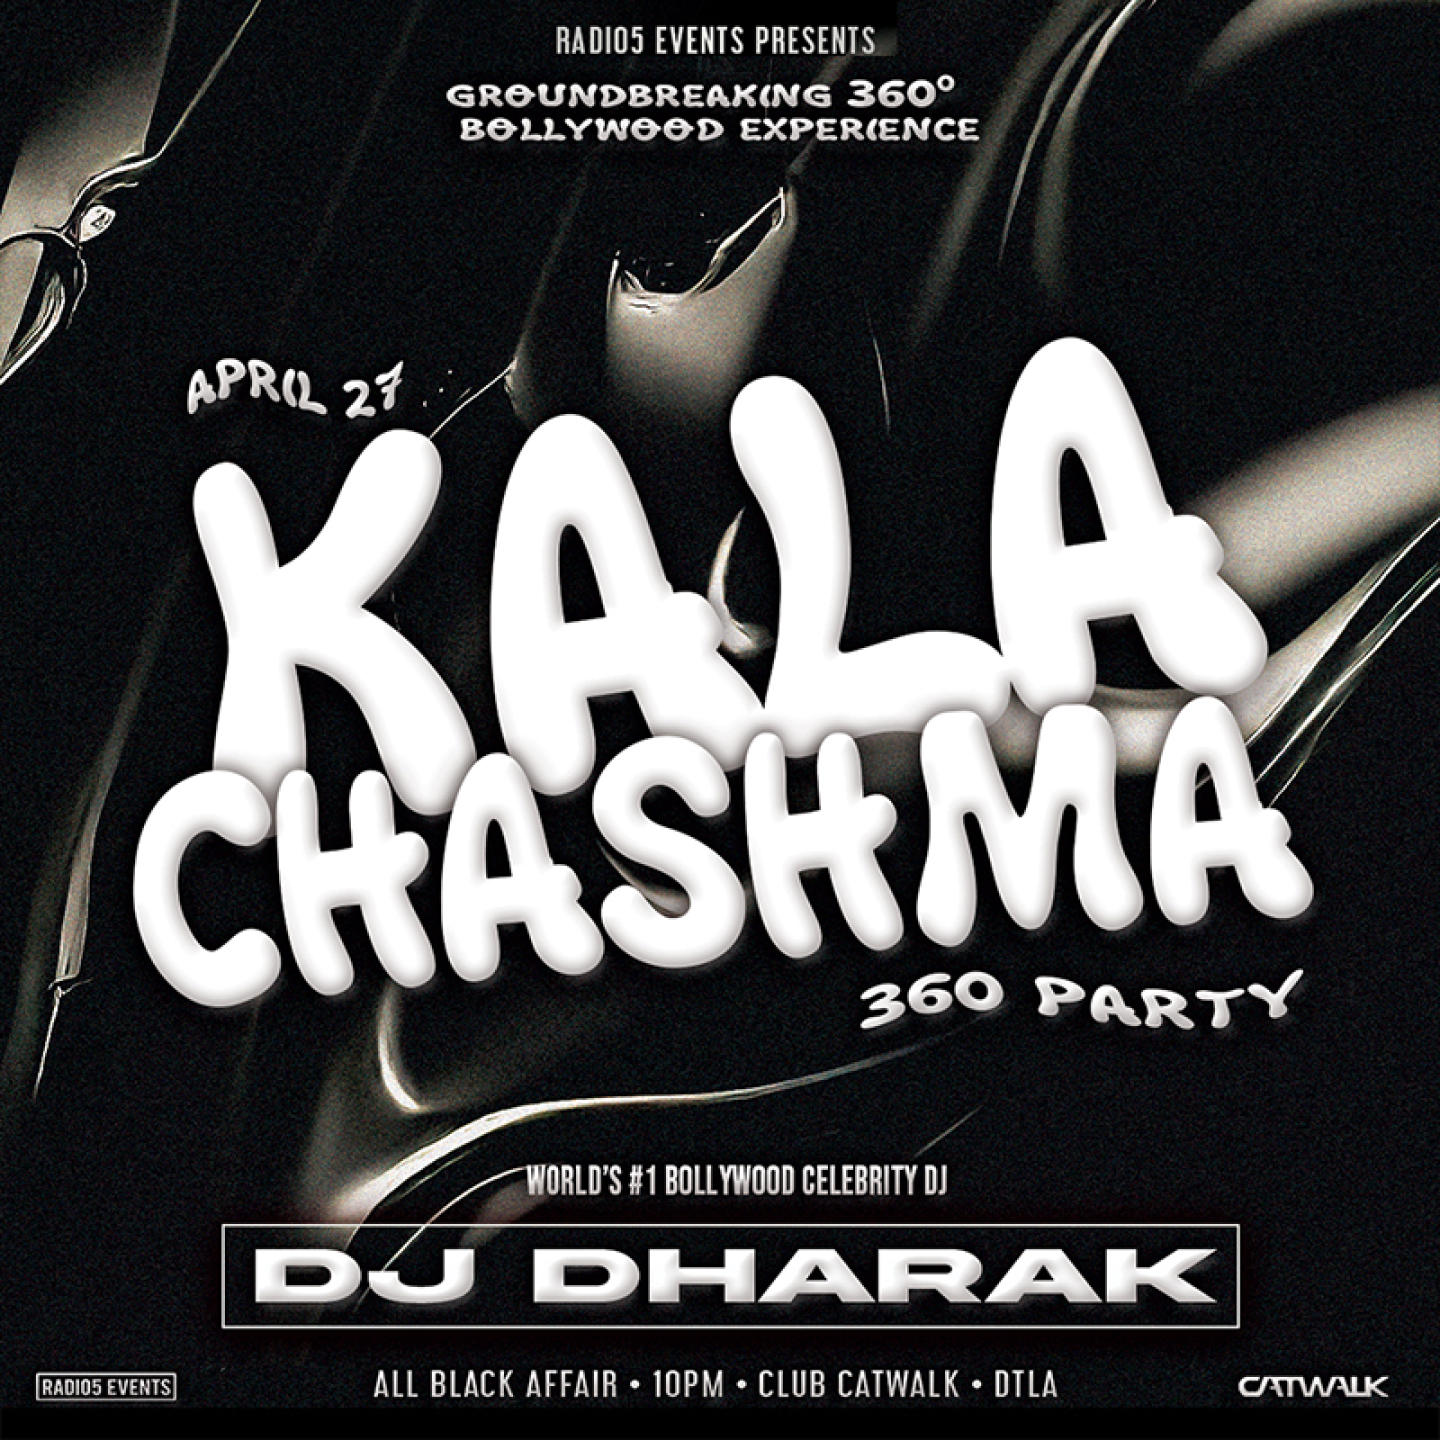 Kala Chashma Party: India's #1 DJ DHARAK @ Catwalk Club ('360° EXPERIENCE')